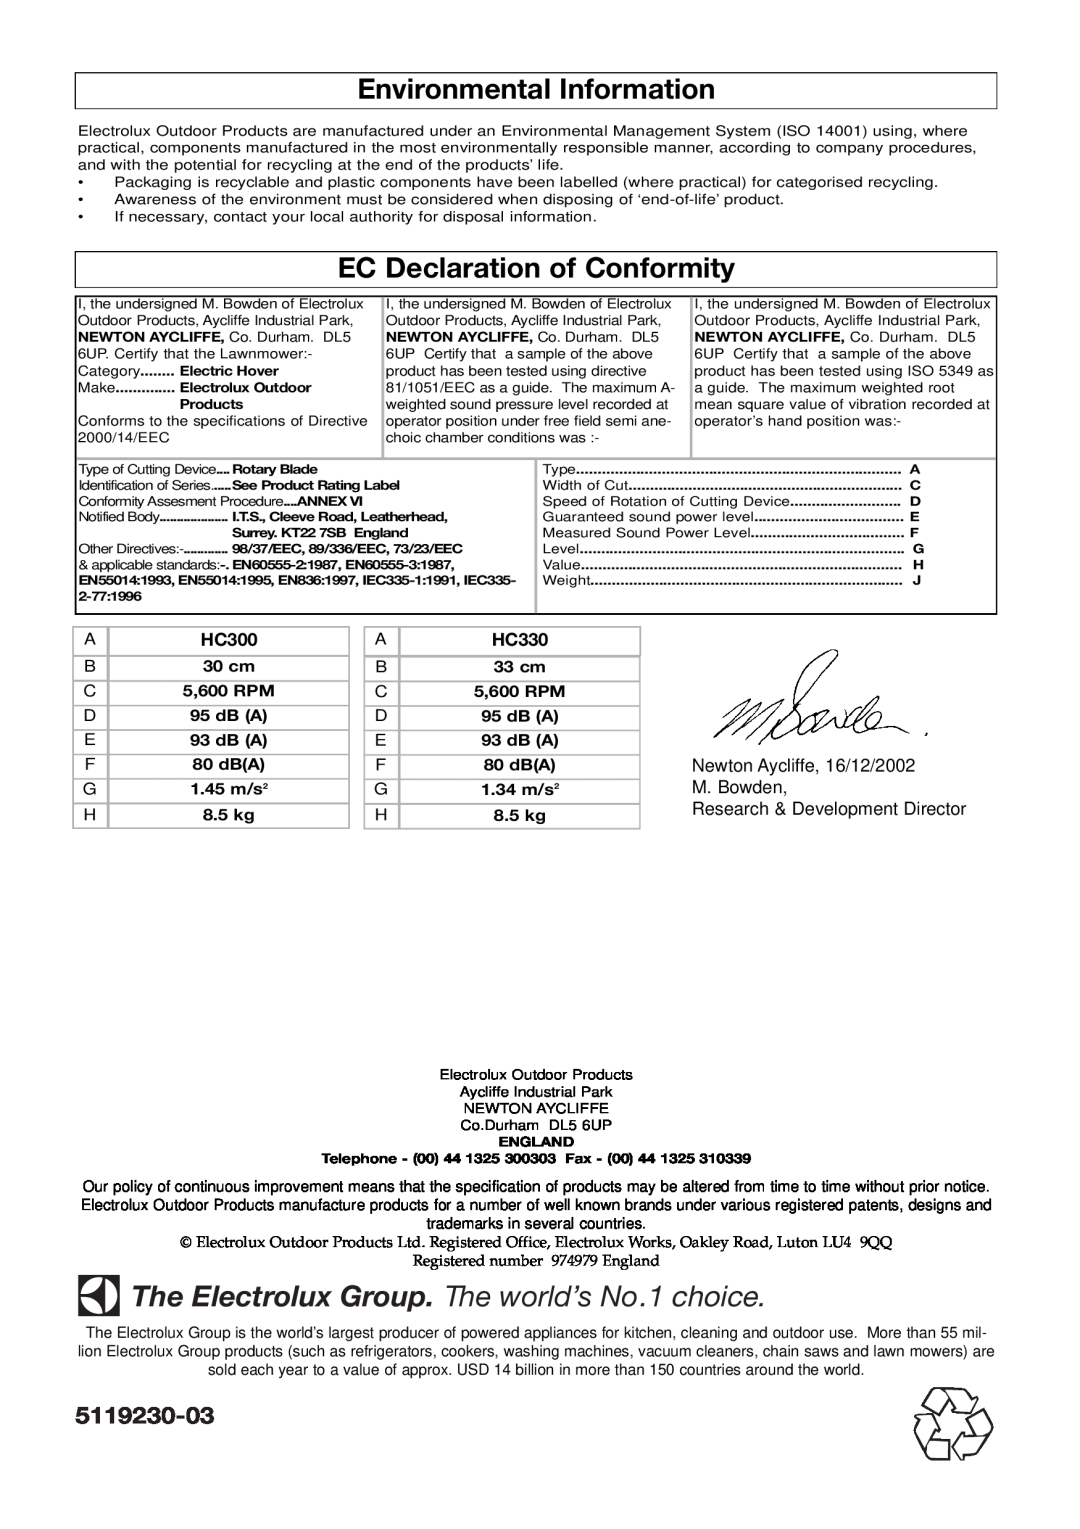 Flymo Hover Compact manual Environmental Information, EC Declaration of Conformity, HC300, HC330, 5119230-03 